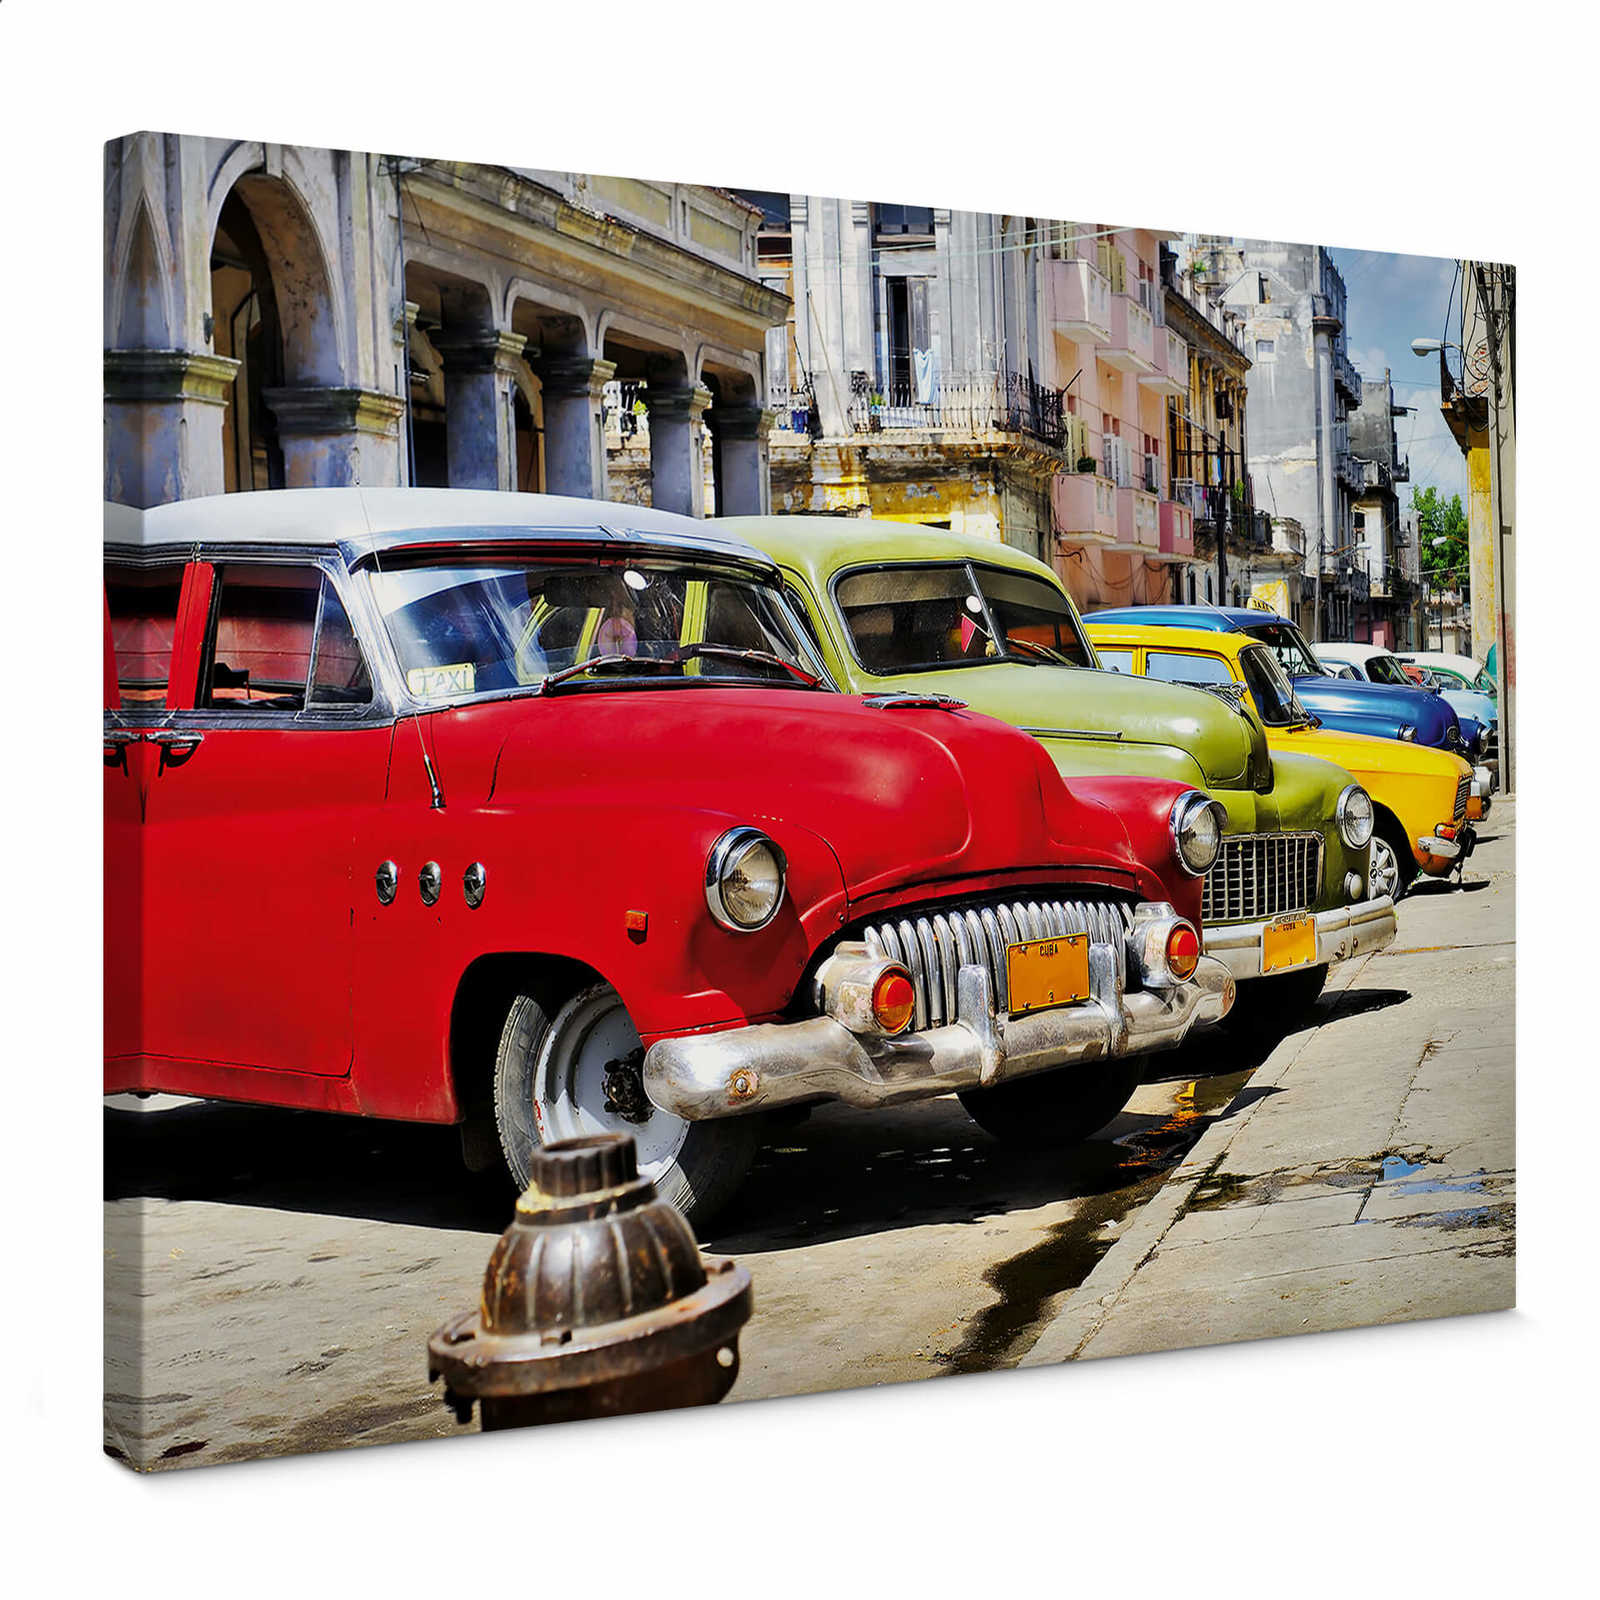         Cuba canvas print vintage cars in Havana
    